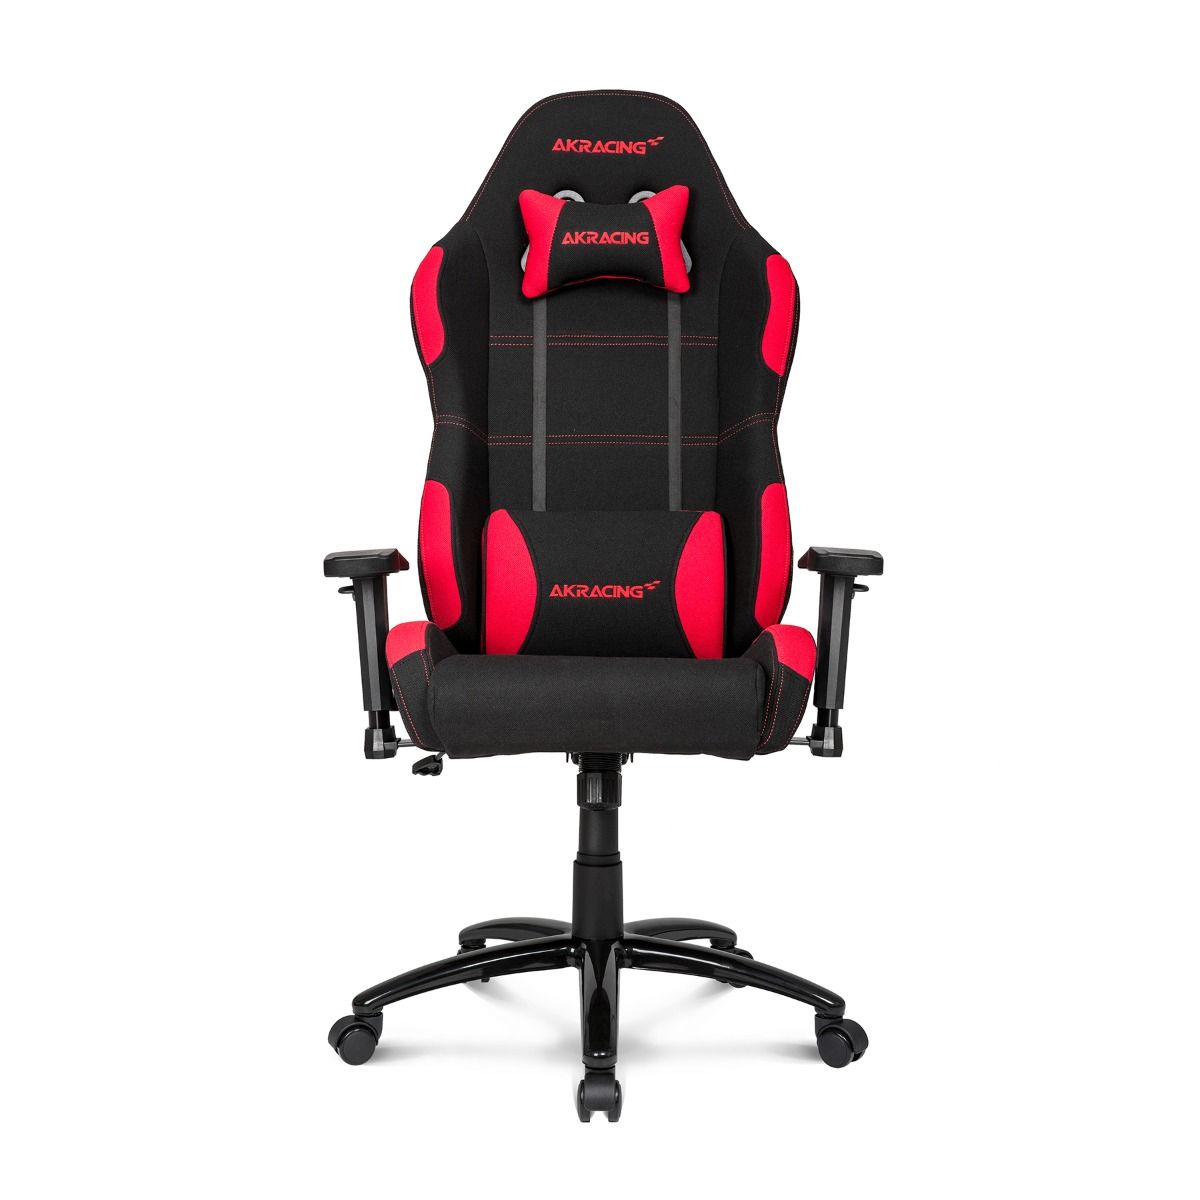 AKRACING K7012 Gaming Chair Black Red